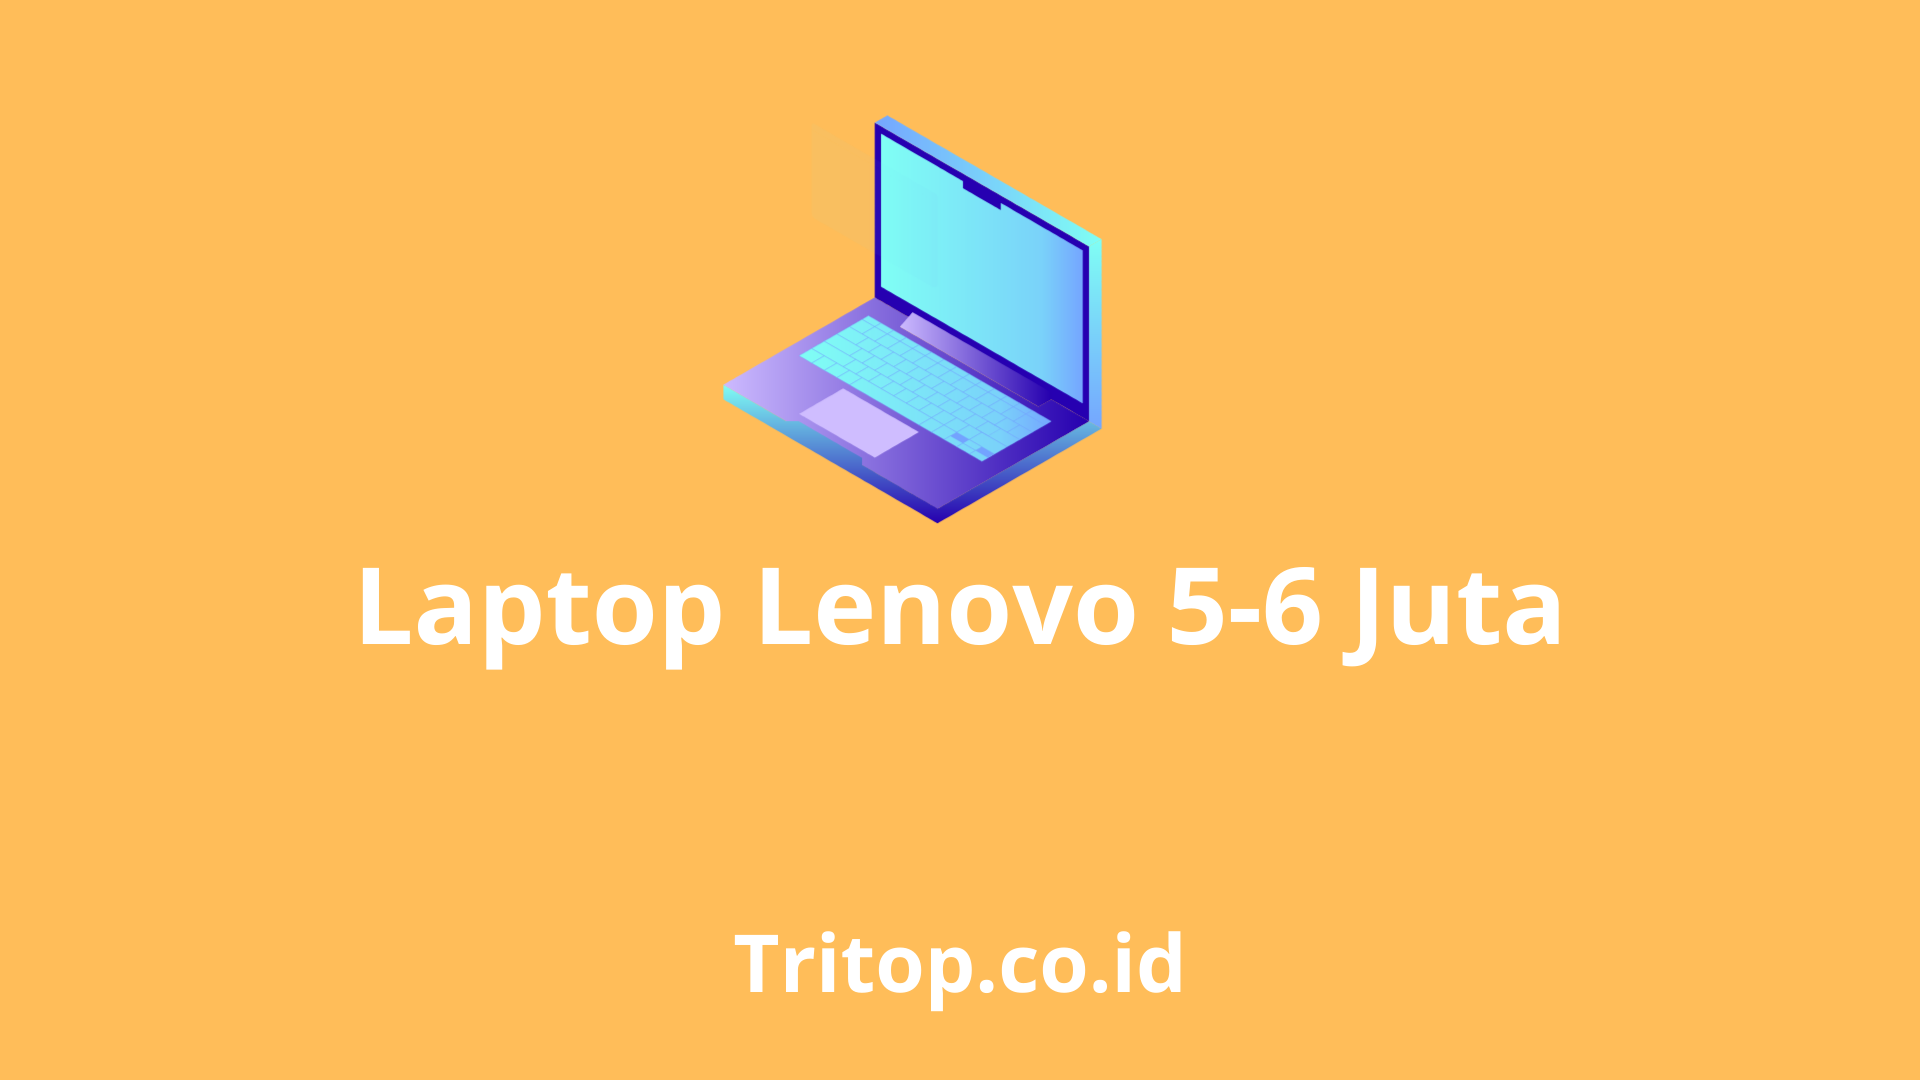 Laptop Lenovo 5-6 Juta tritop.co.id